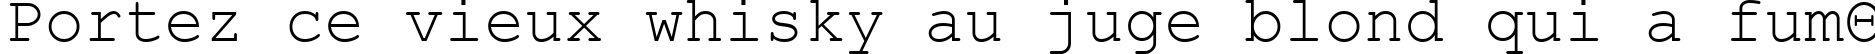 Пример написания шрифтом MS LineDraw текста на французском